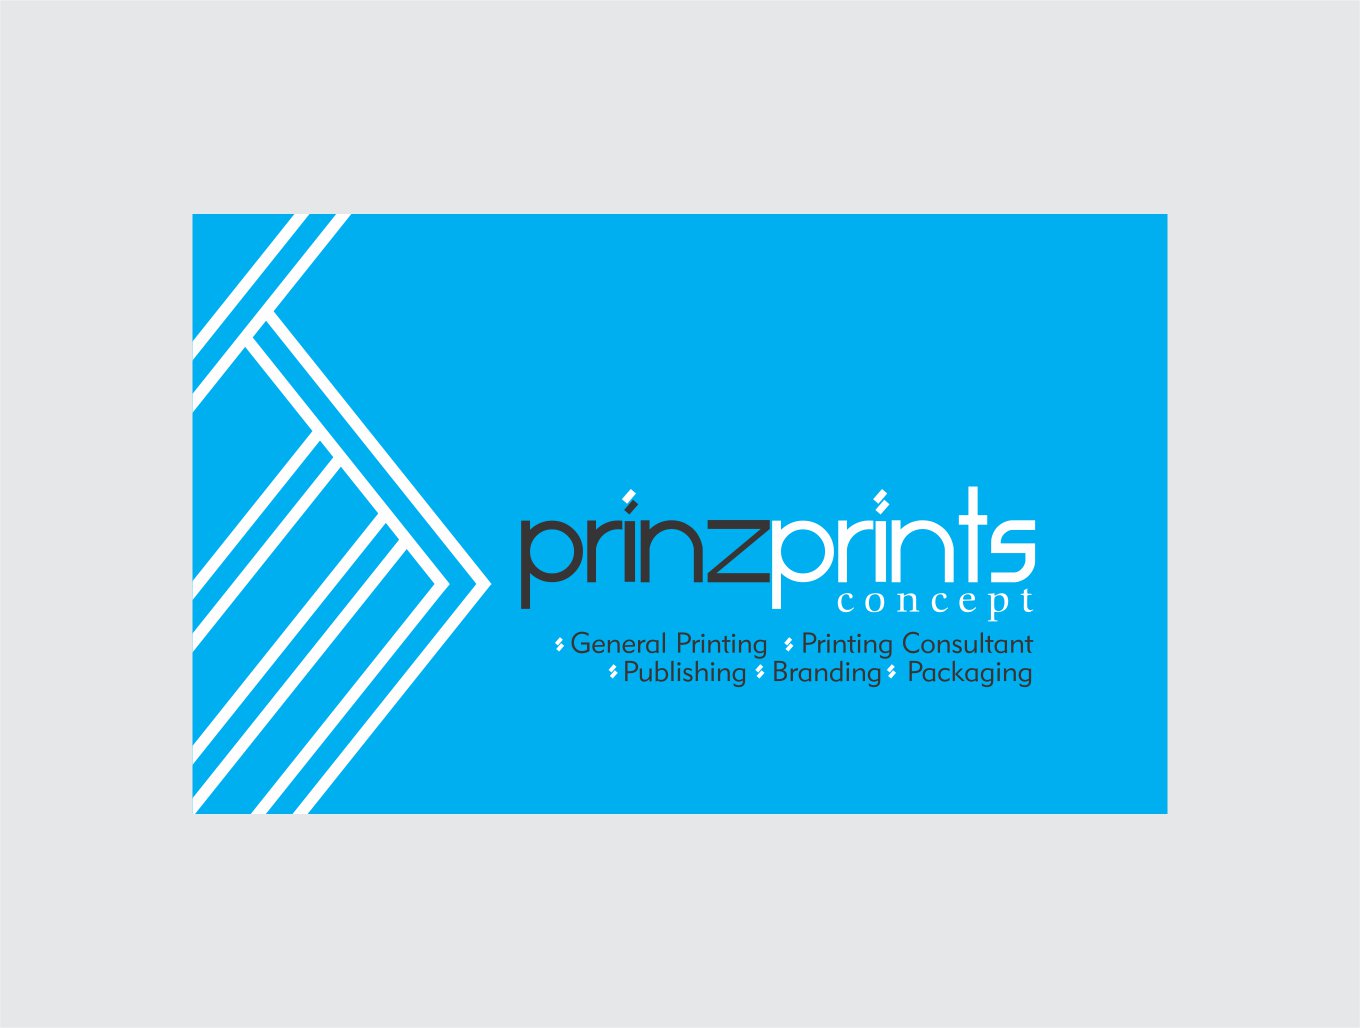 Prinzprints Concept